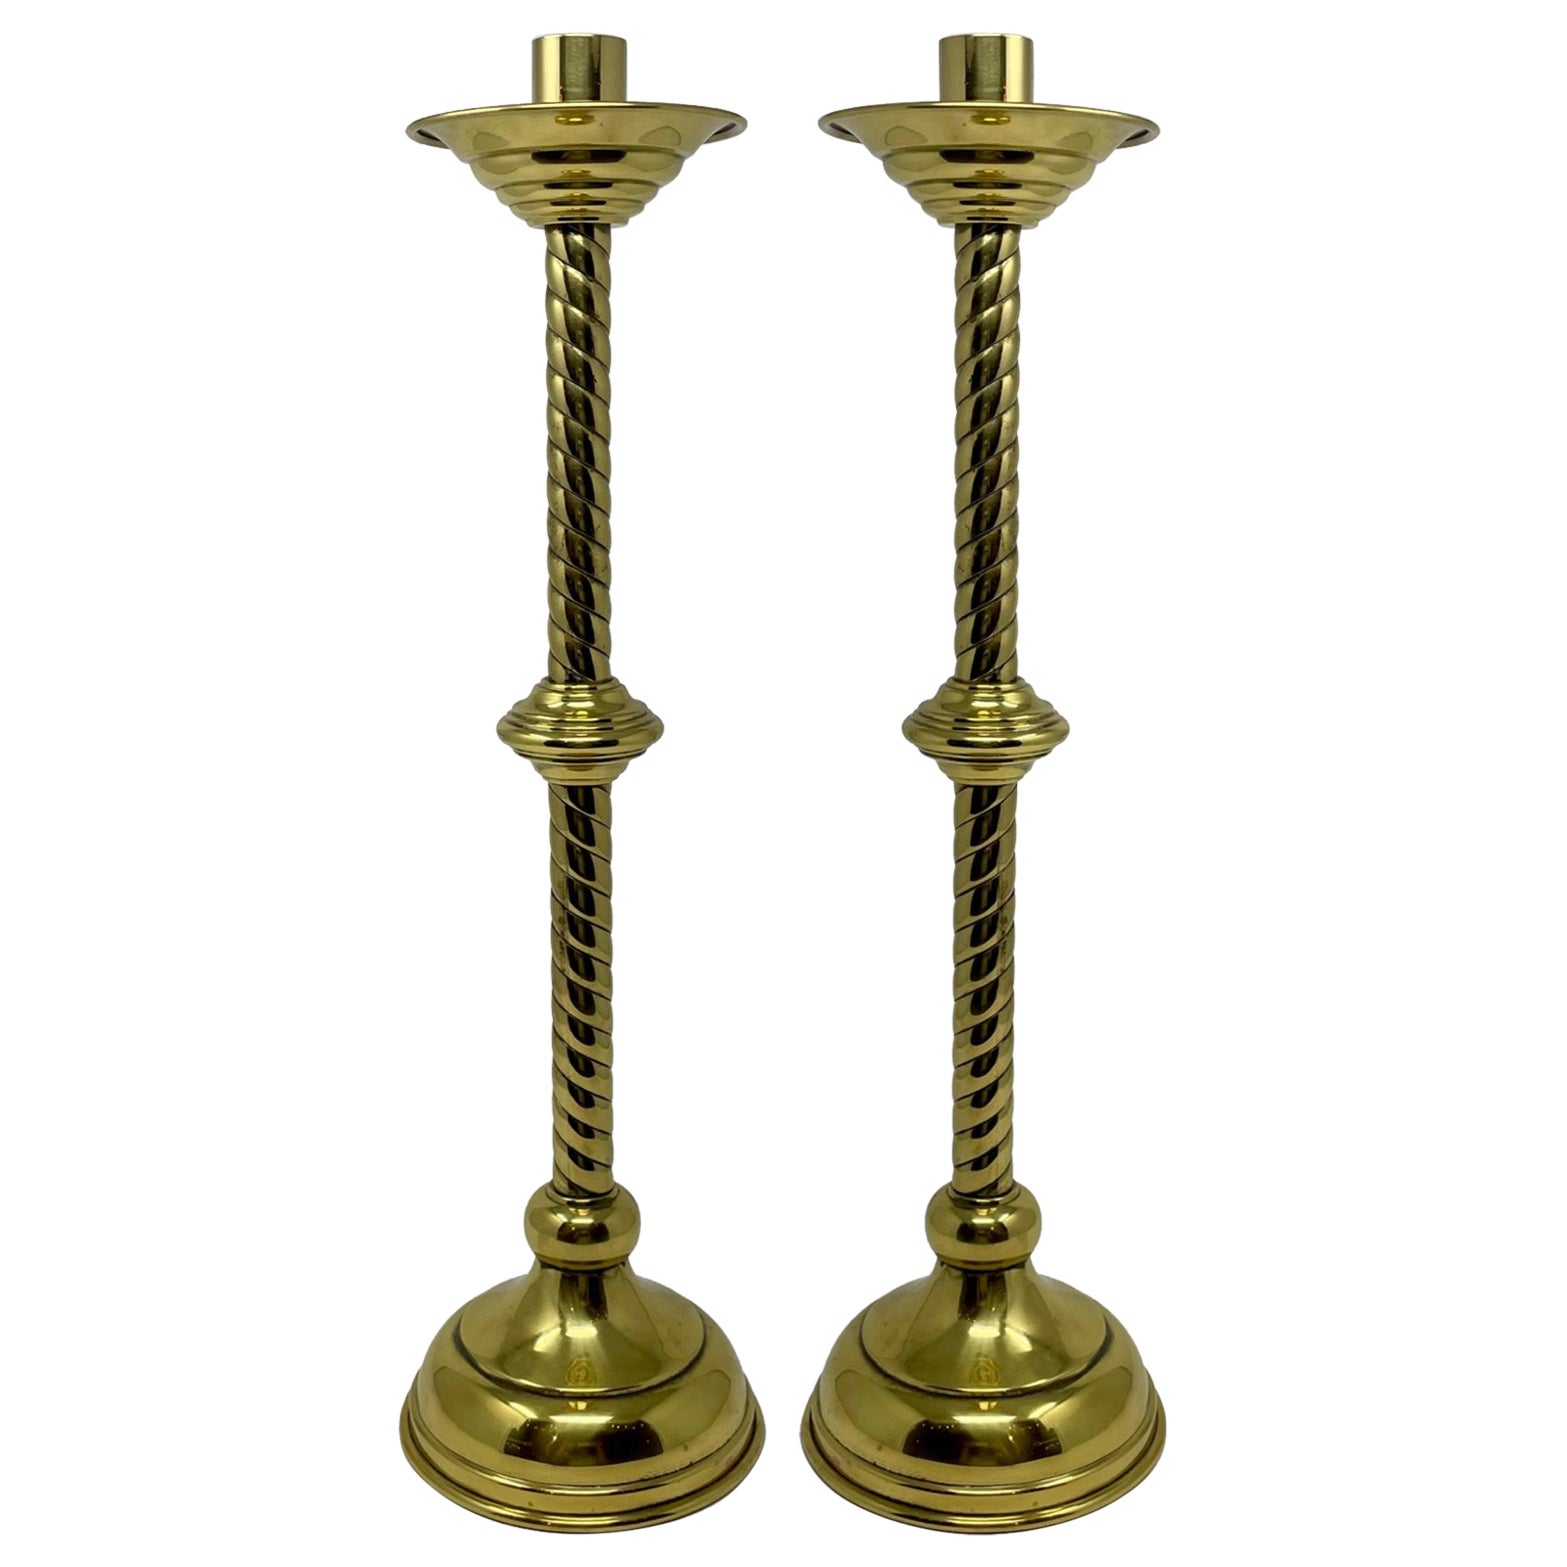 Pair of Antique Brass Candlesticks, circa 1880